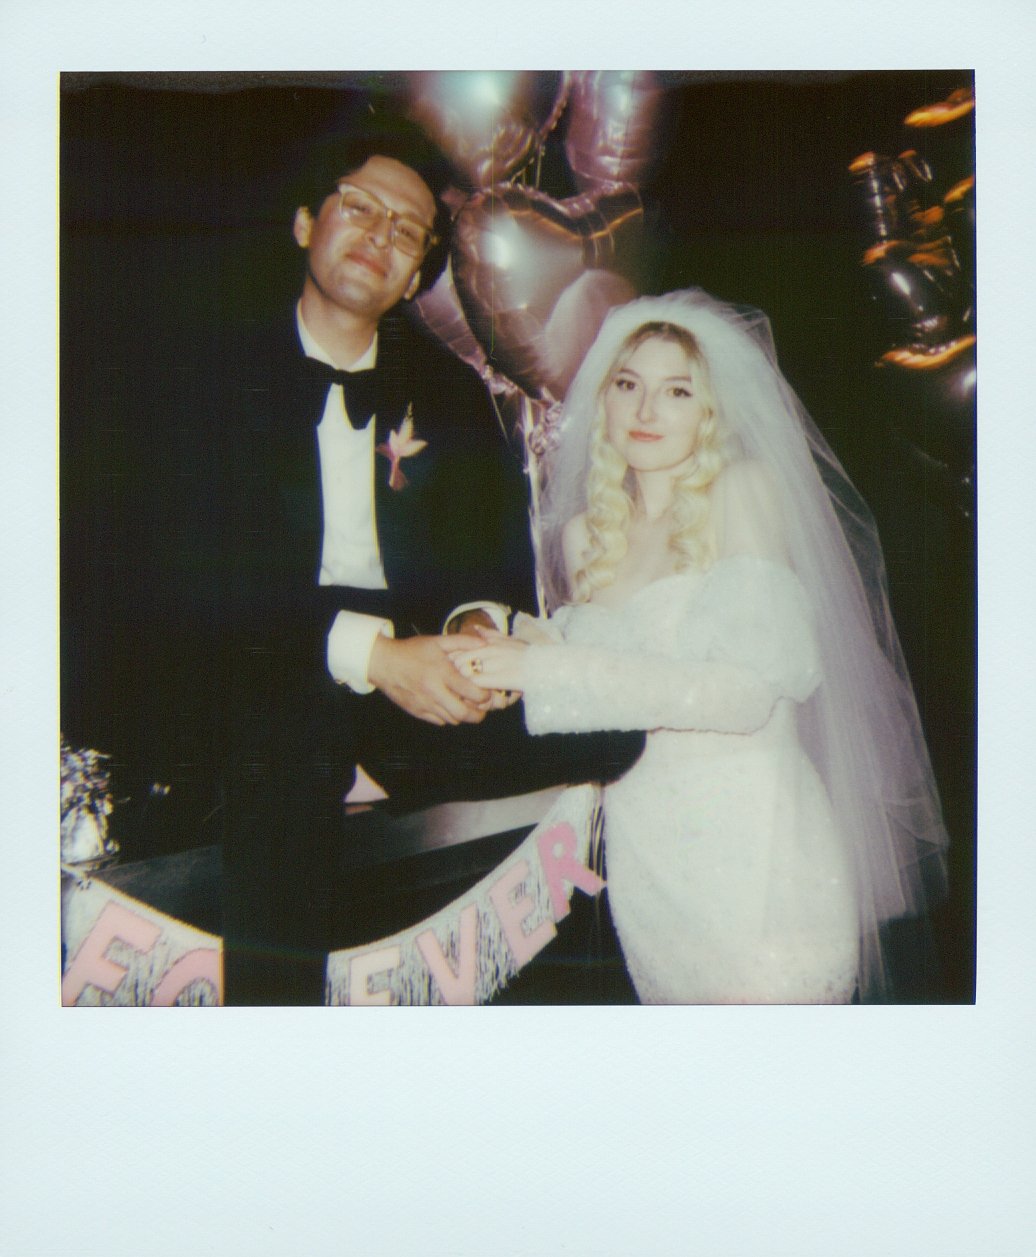 Wedding-taken-on-polaroids30.jpg